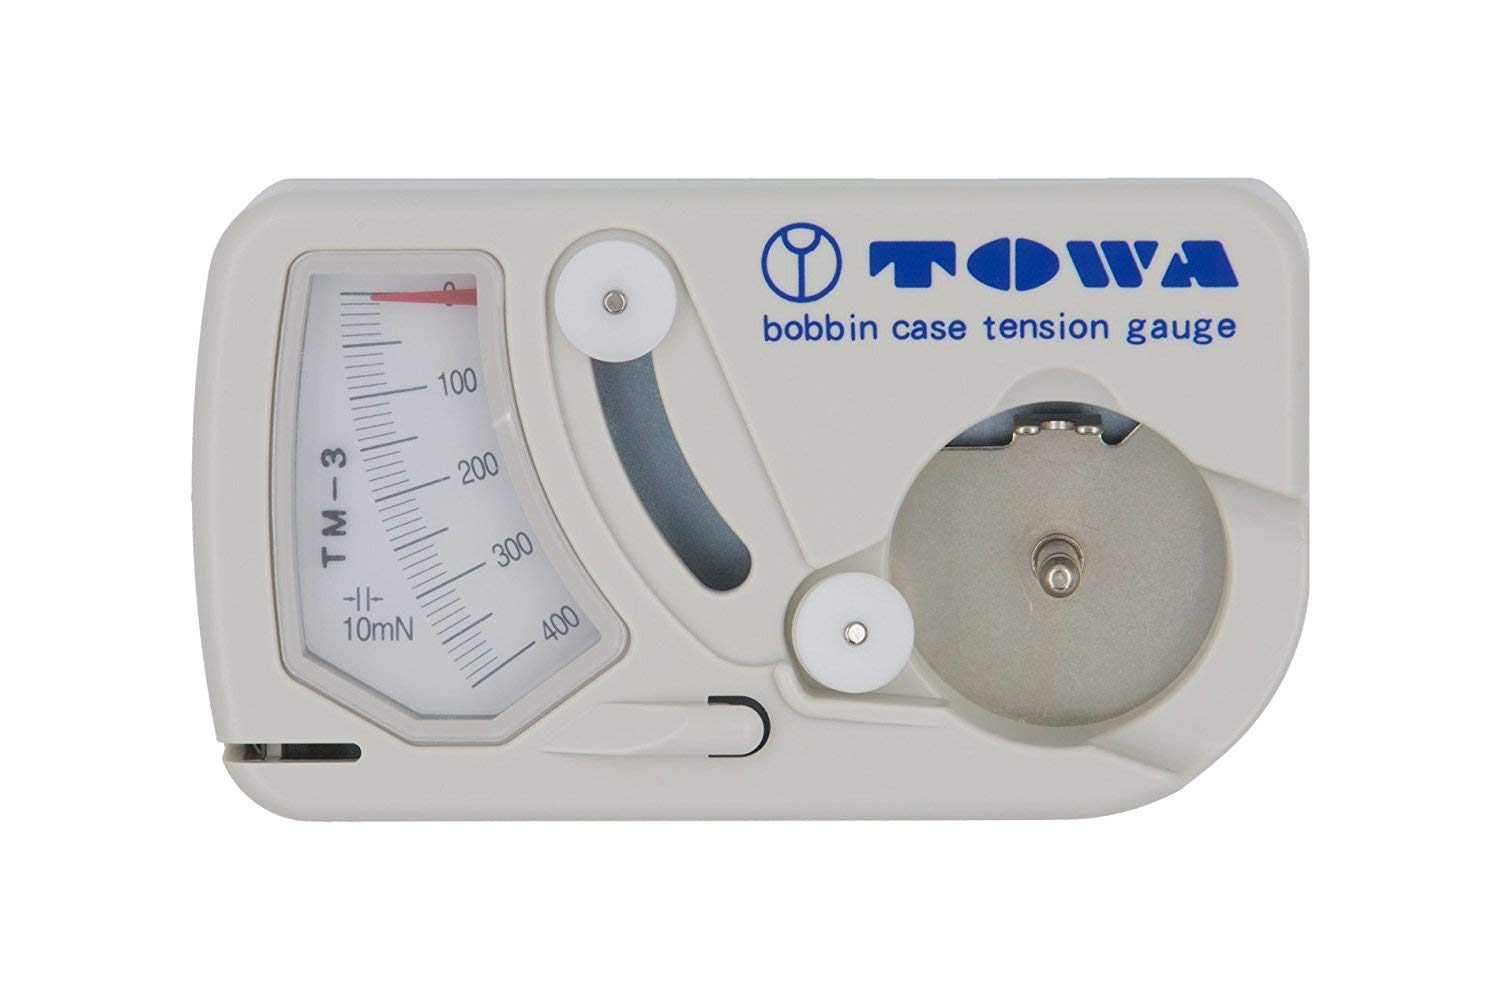 Bobbin Case Tension Gauge Towa Tm-3 Style M Jumbo Bobbin Case Japan